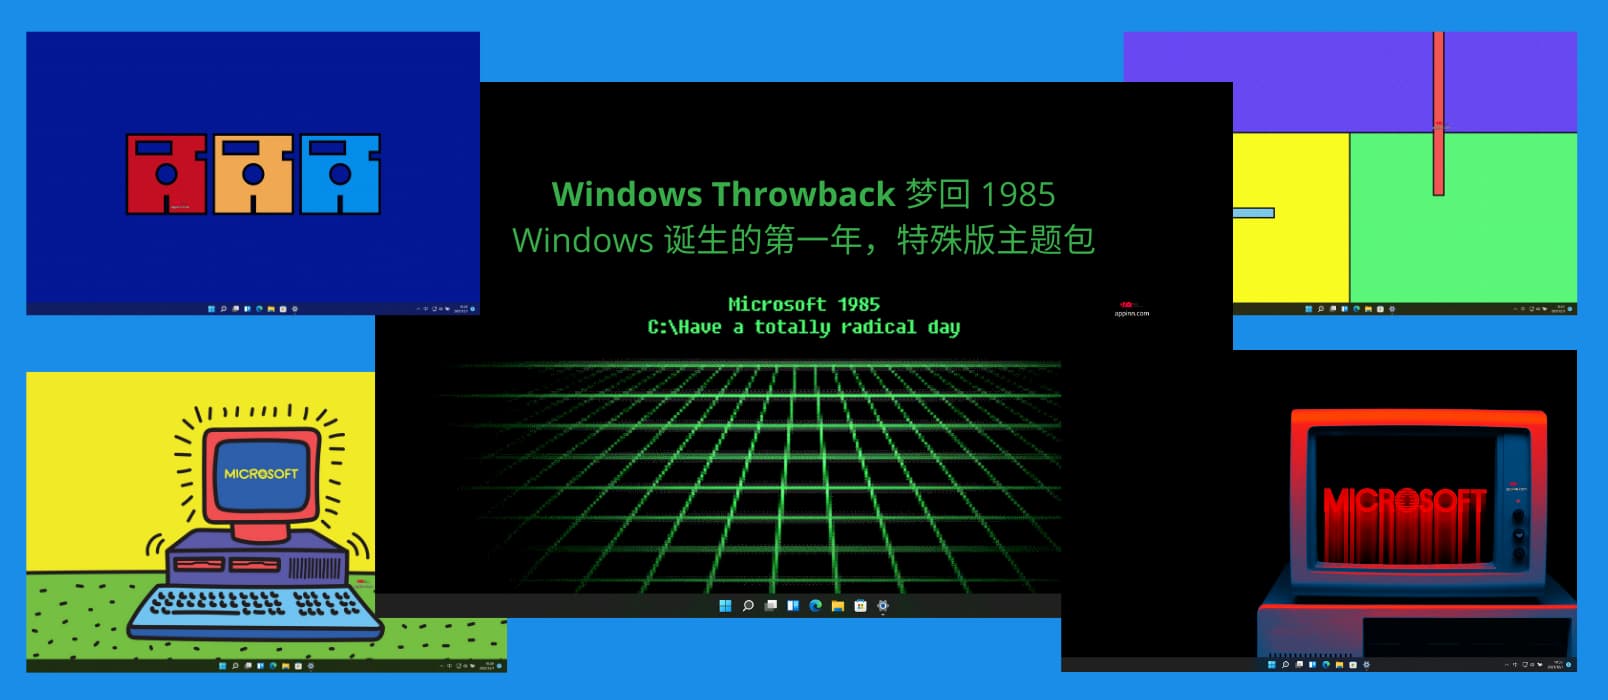 Windows Throwback - 梦回 1985，Windows 诞生的第一年，特殊版主题包